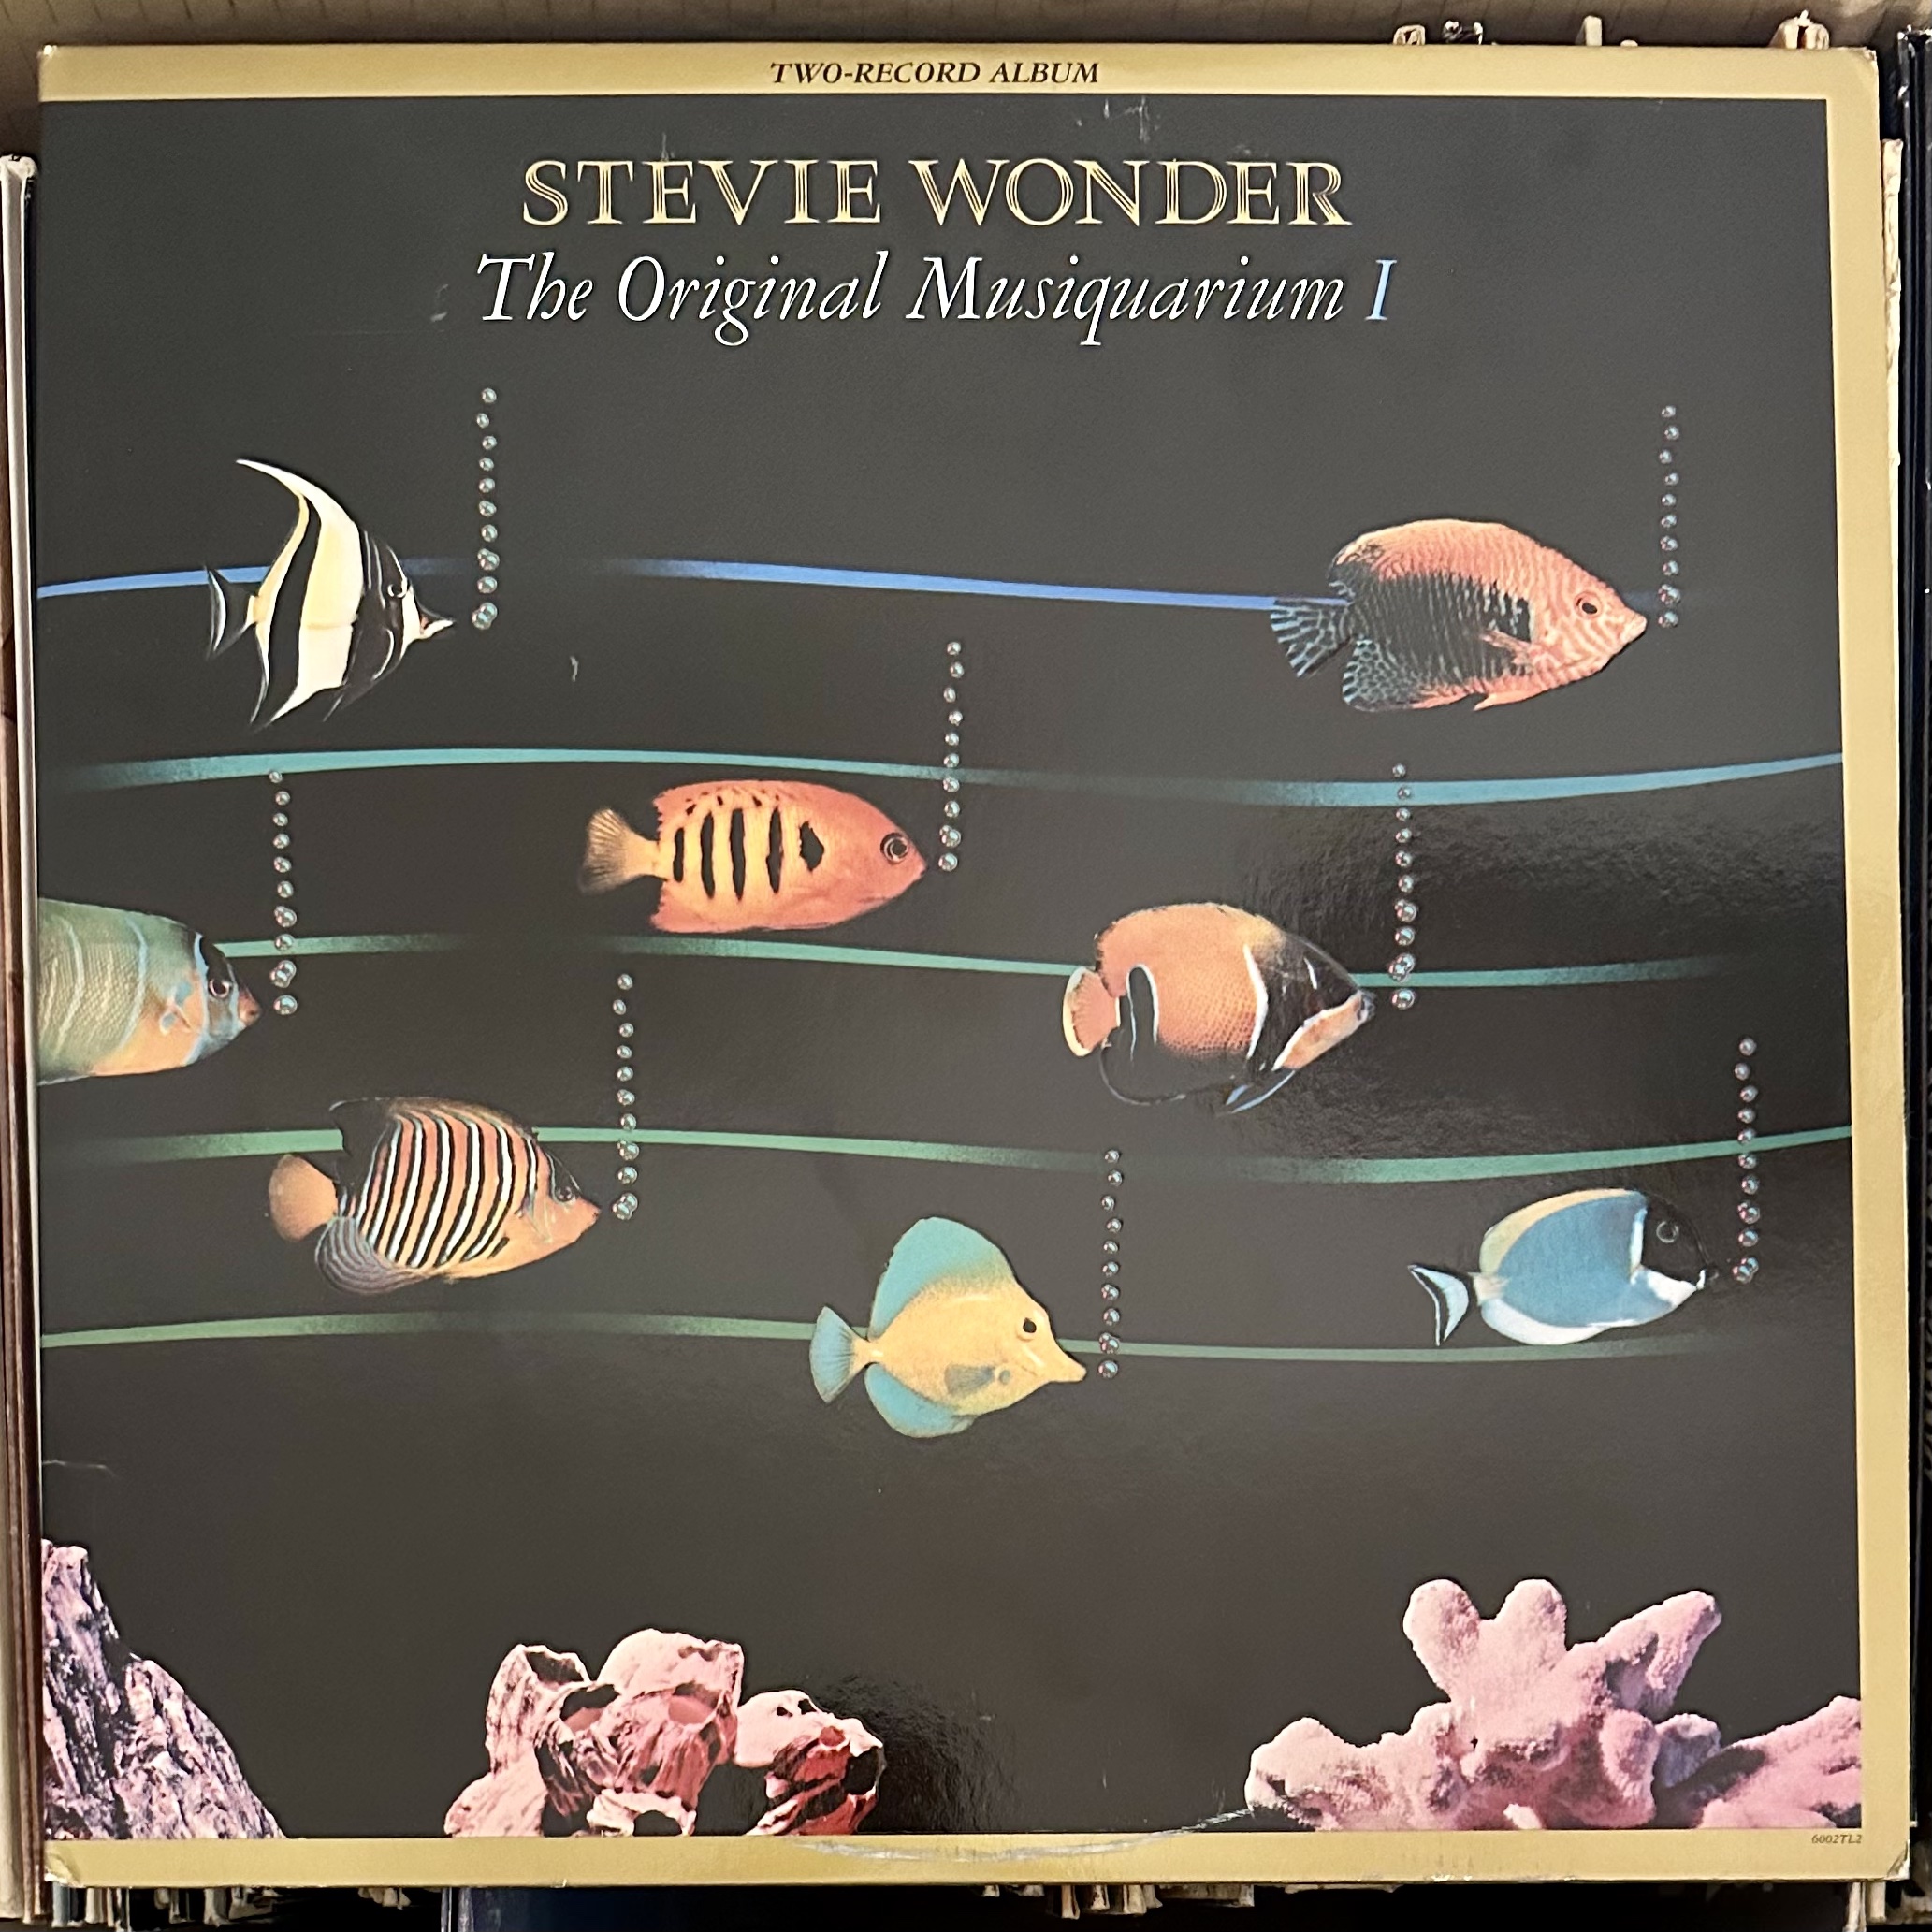 The Original Musiquarium I by Stevie Wonder